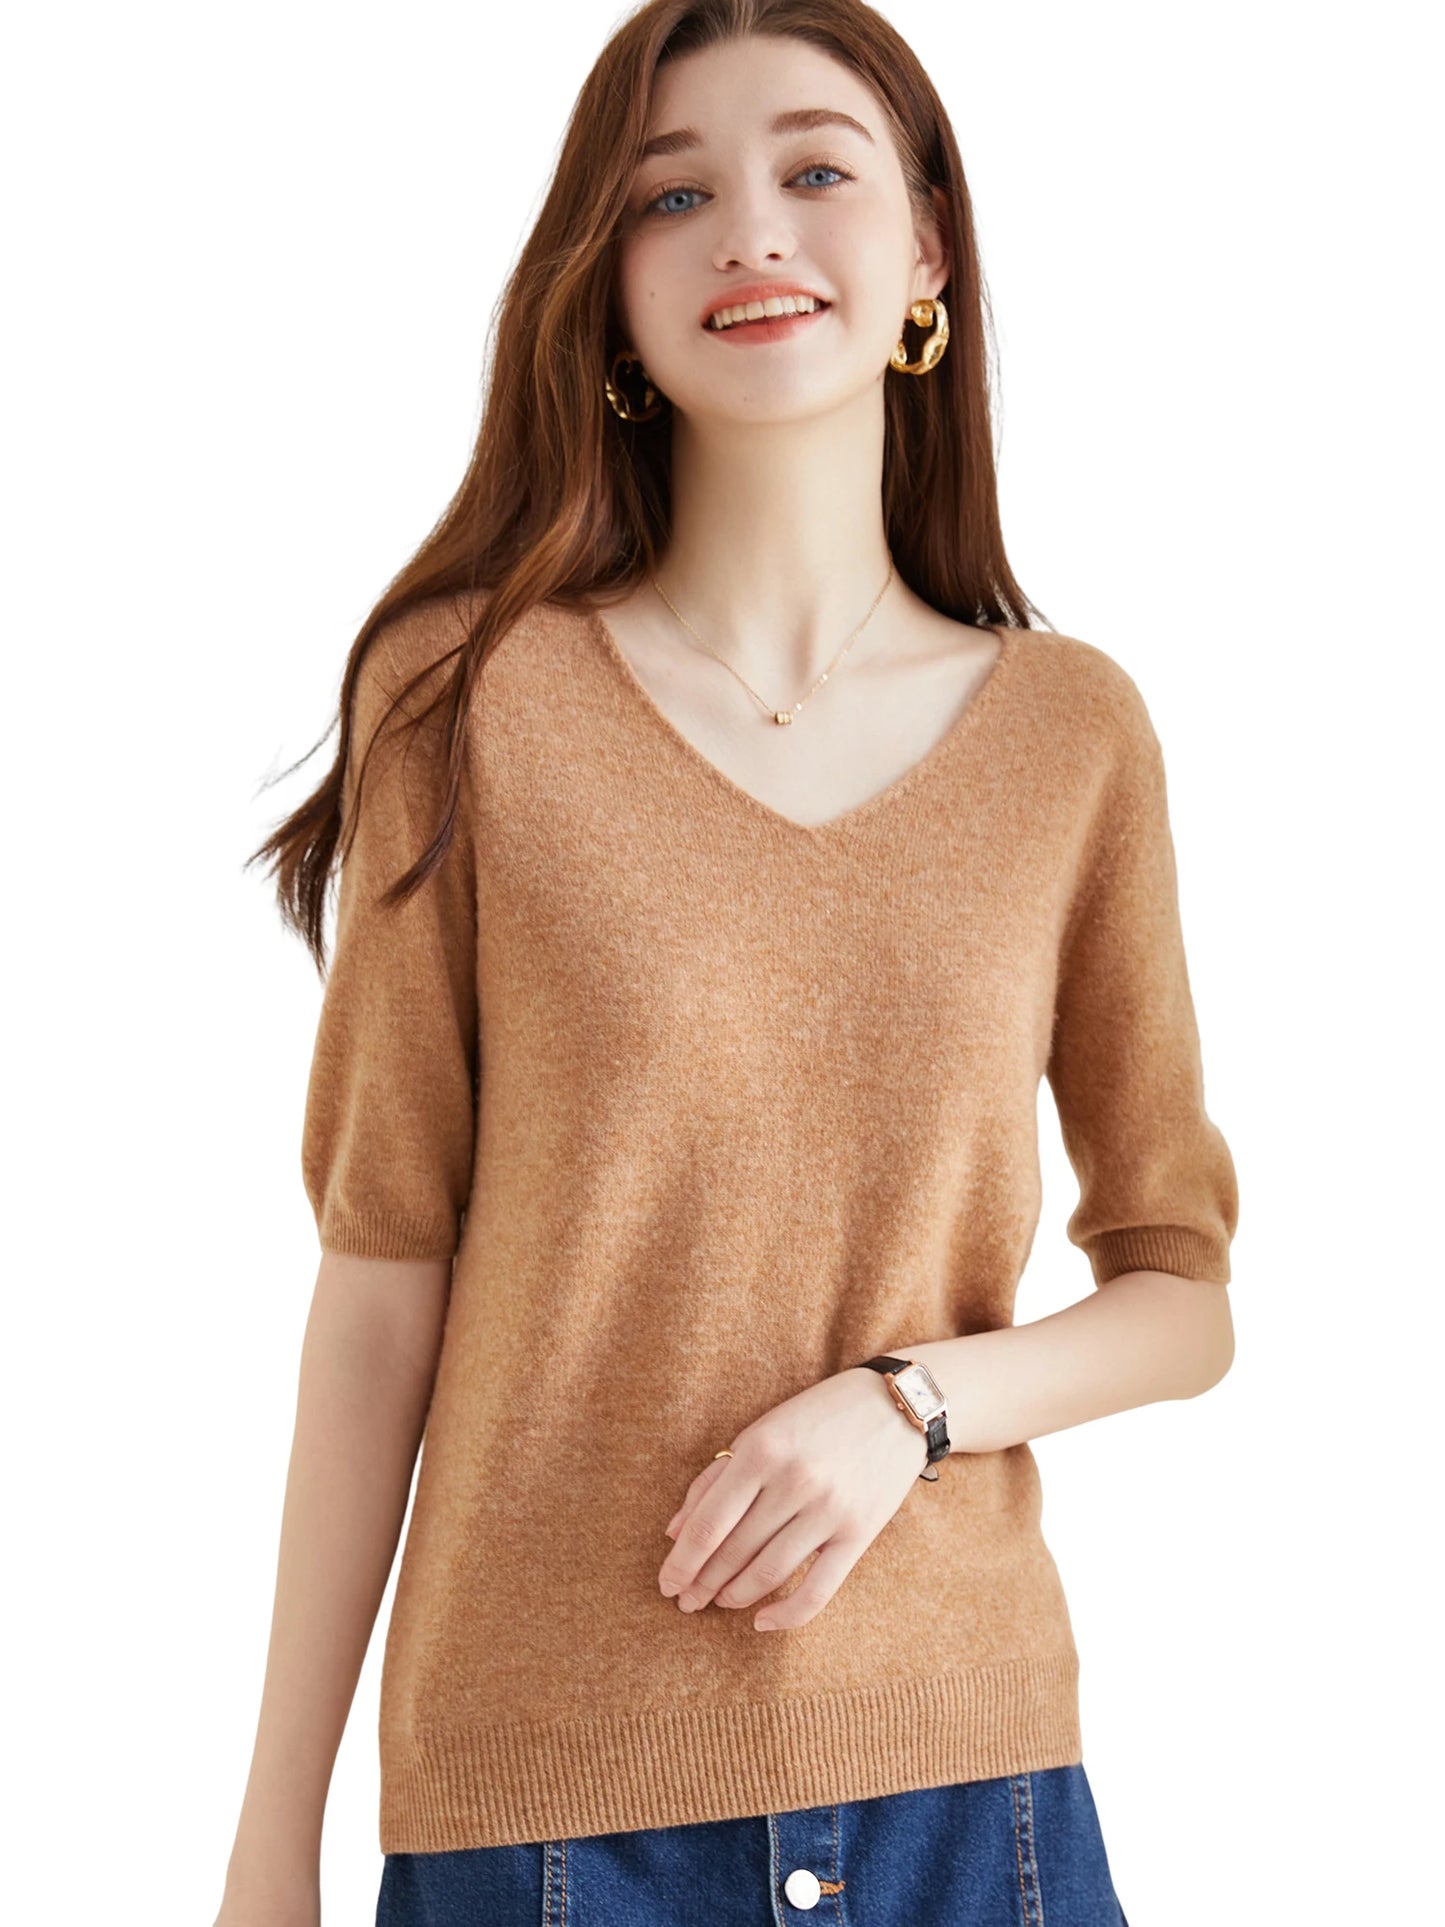 Women's Sweater 100% Merino Wool Sweater for Women Pullover Short Sleeve Tops Spring Summer V Neck Soft Knitted Female Clothing